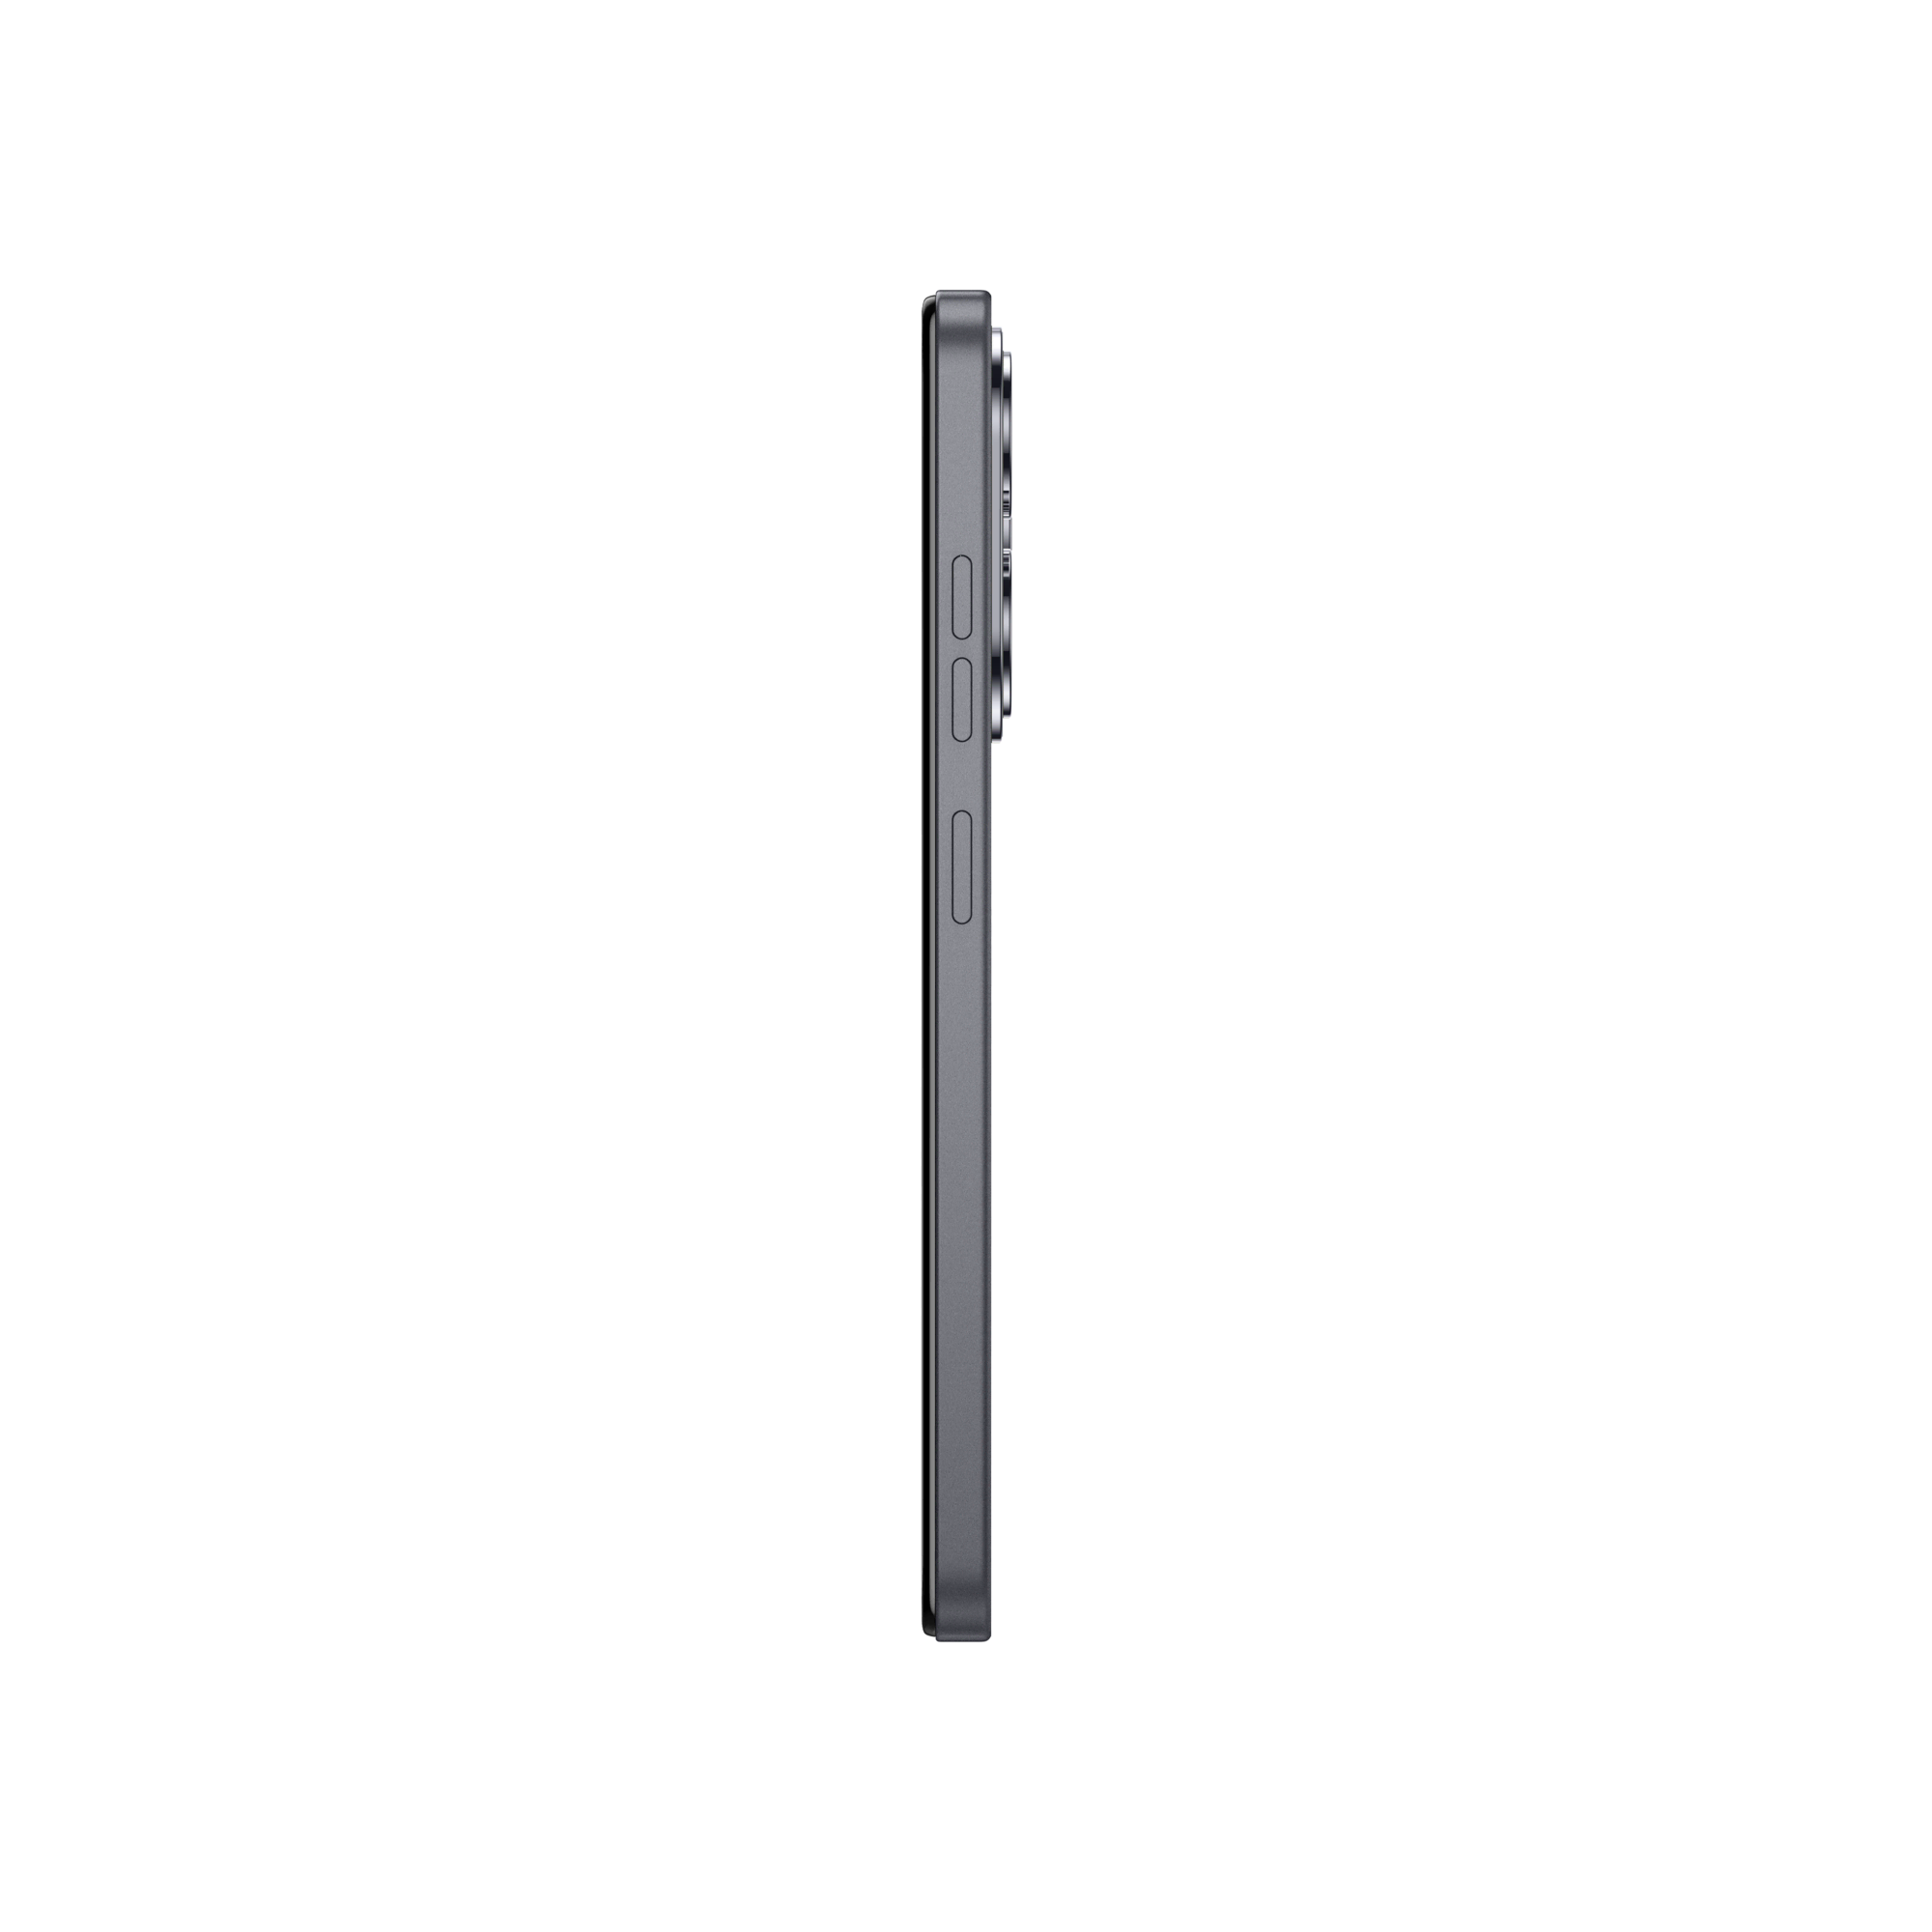 TECNO Spark 20 8+256 Siyah Android Telefon Modelleri